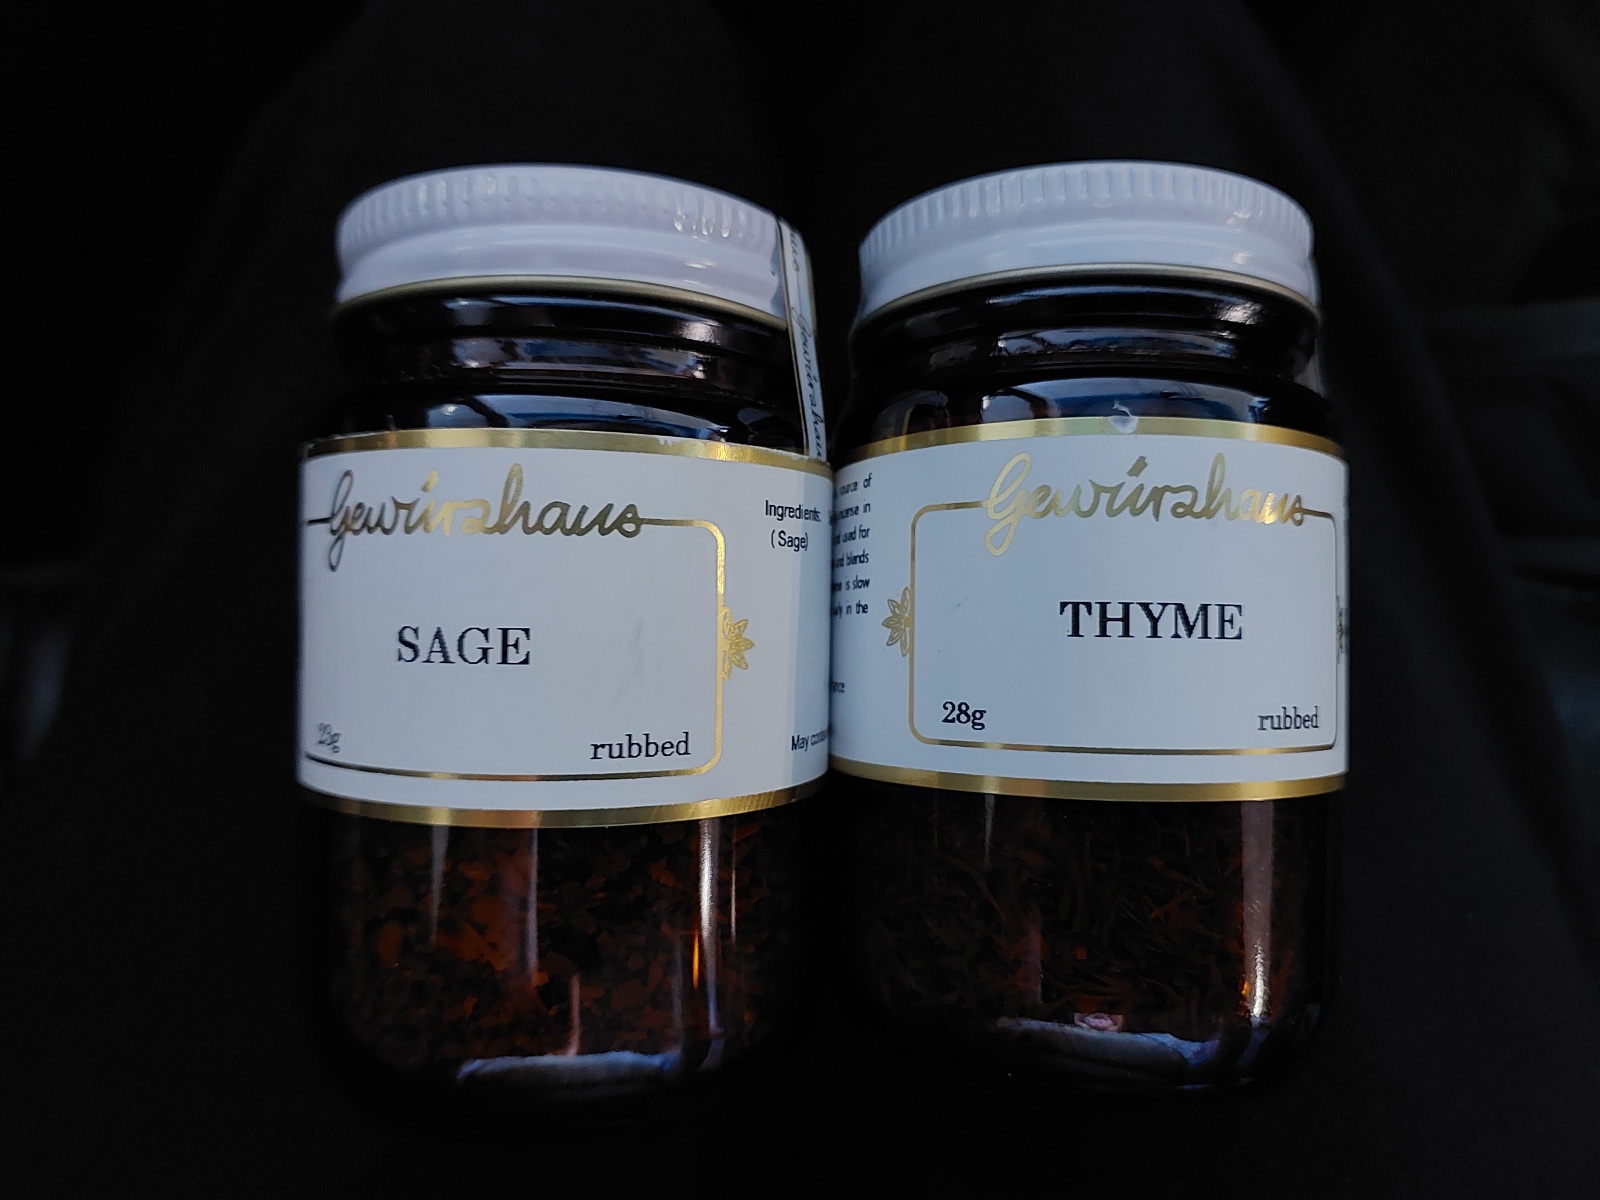 Sage & Thyme